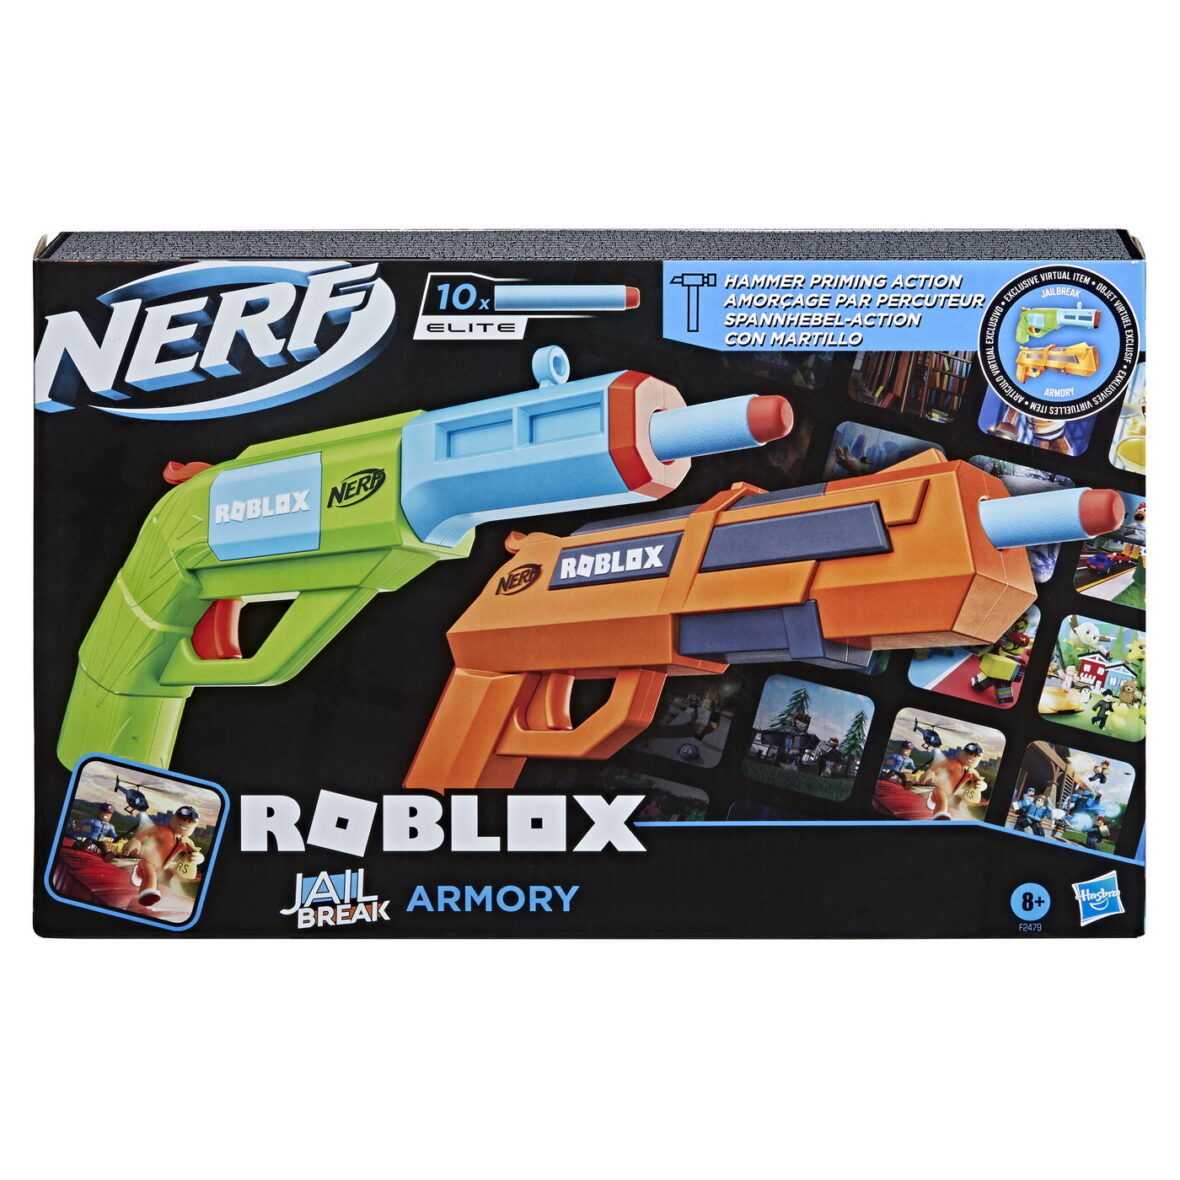 Nerf Blaster Roblox Jailbreak Armory